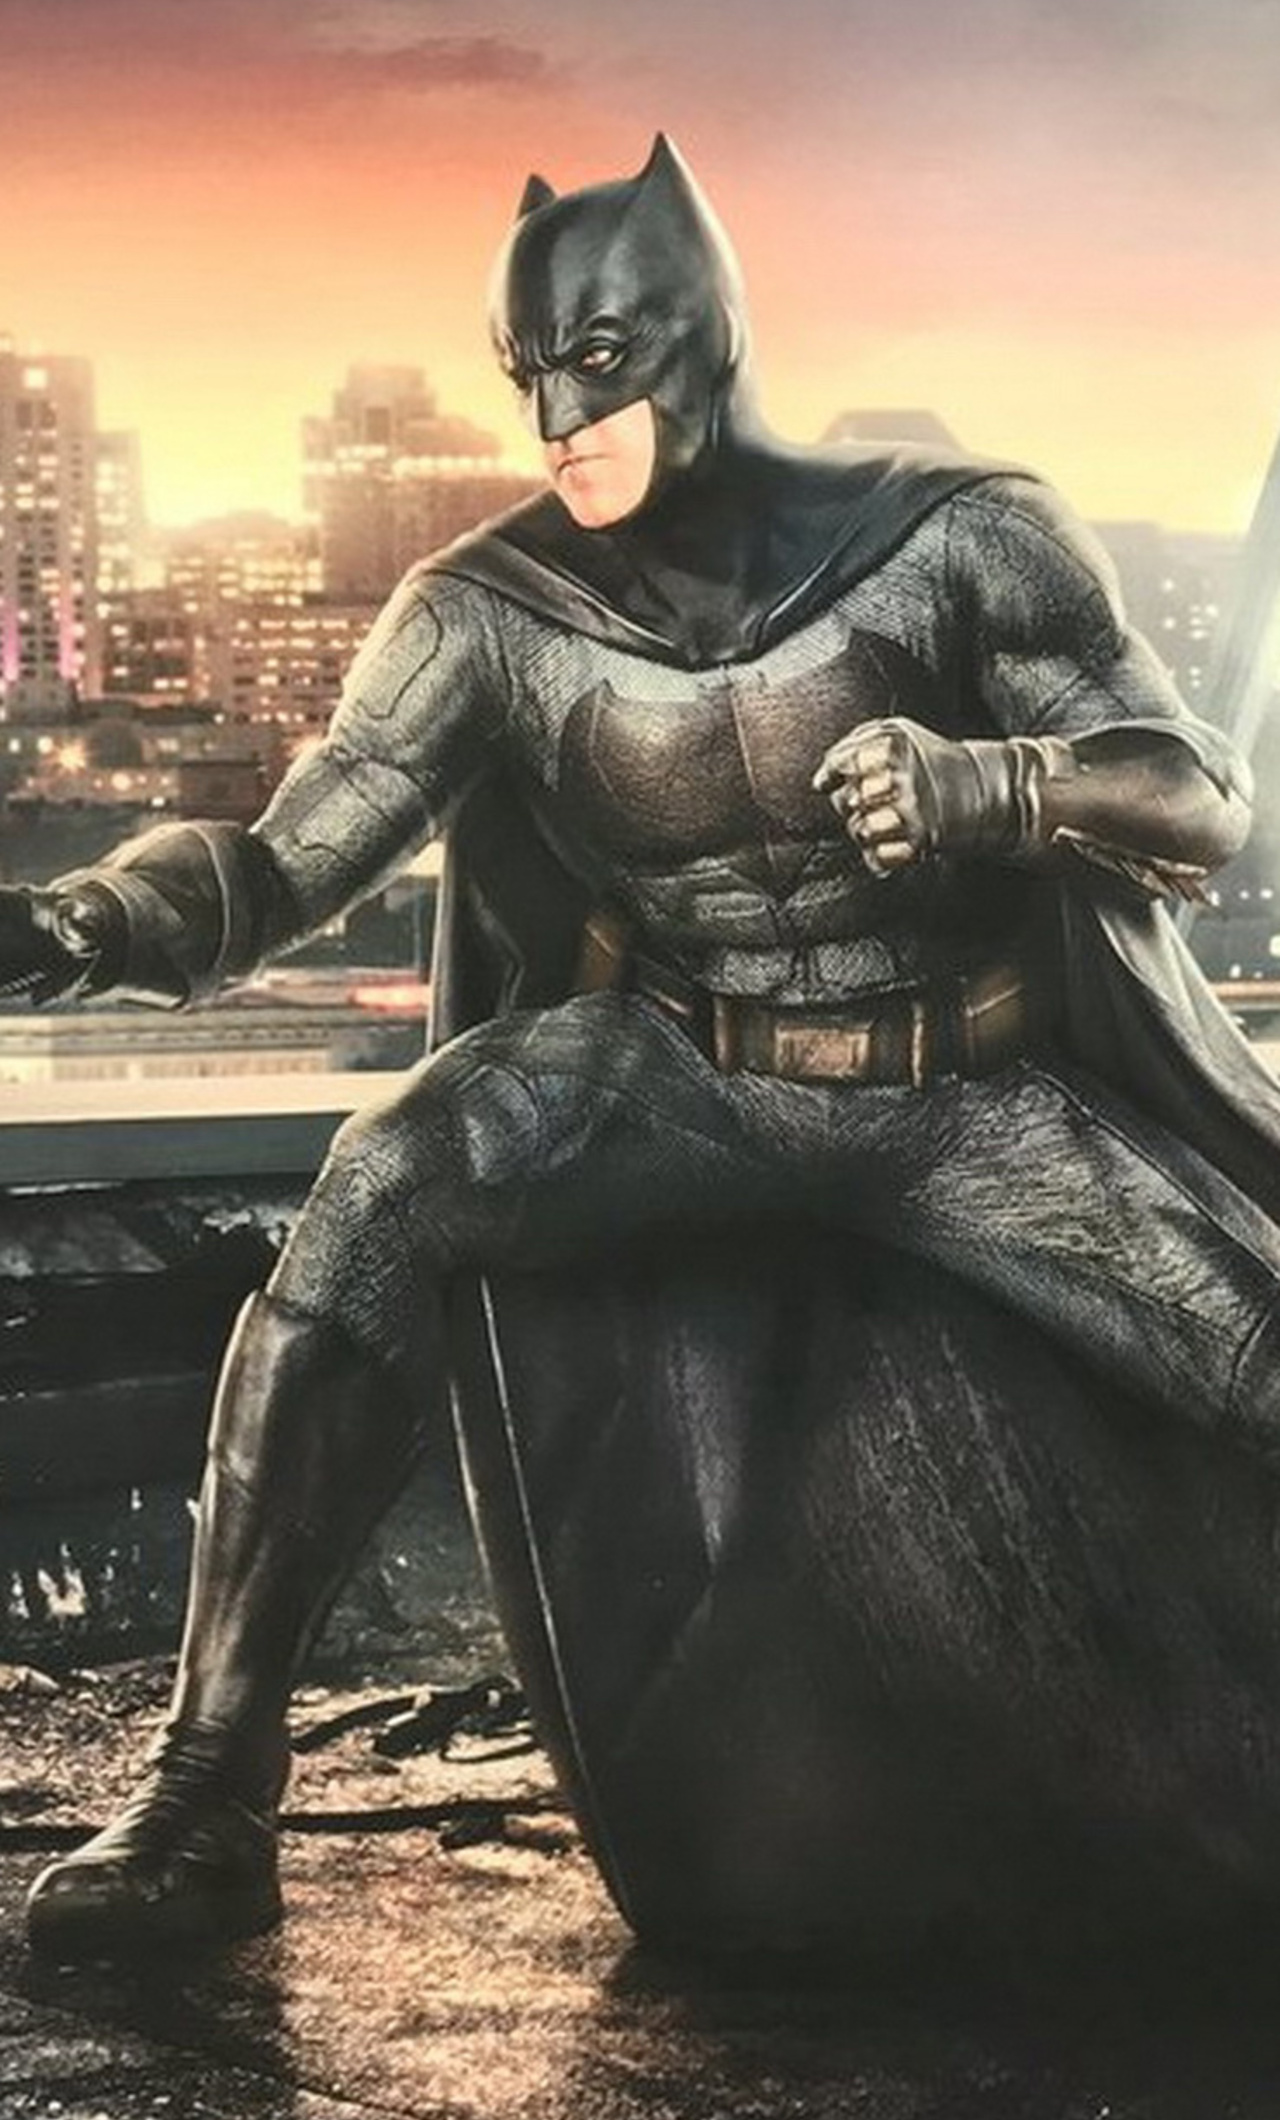 Batman justice league. Justice League Бэтмен. Лига справедливости 2017 Бэтмен. Бэтмен из Лиги справедливости 2017. Бэтмен из Лиги справедливости.